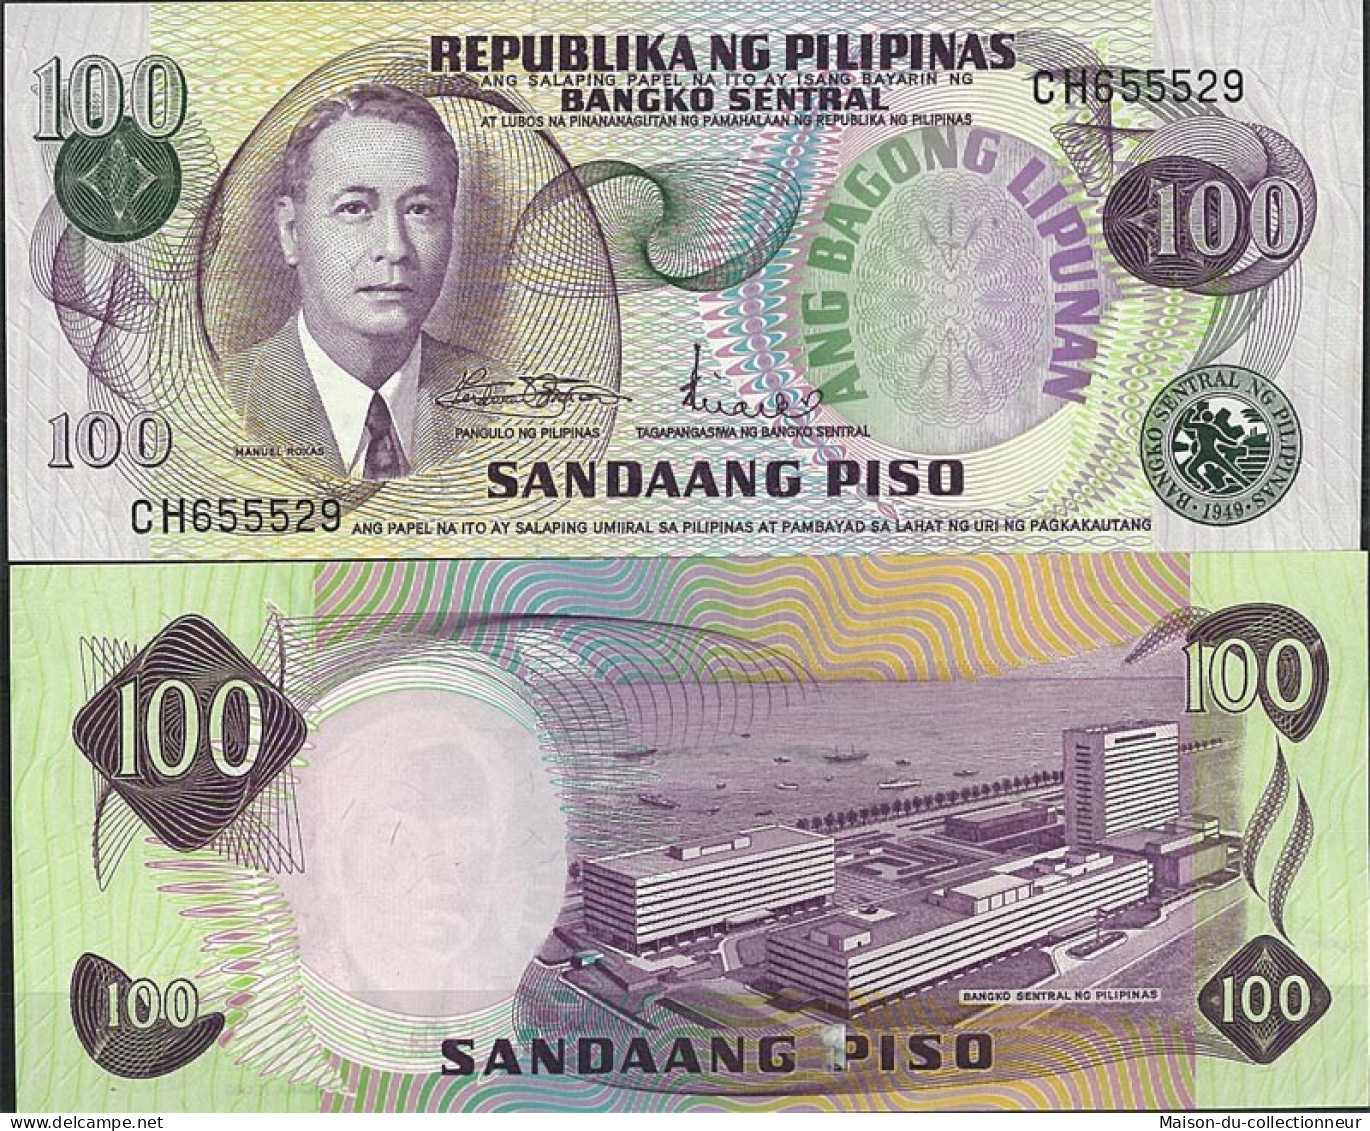 Billet De Banque Philippines Pk N° 164 - De 100 Pesos - Philippines